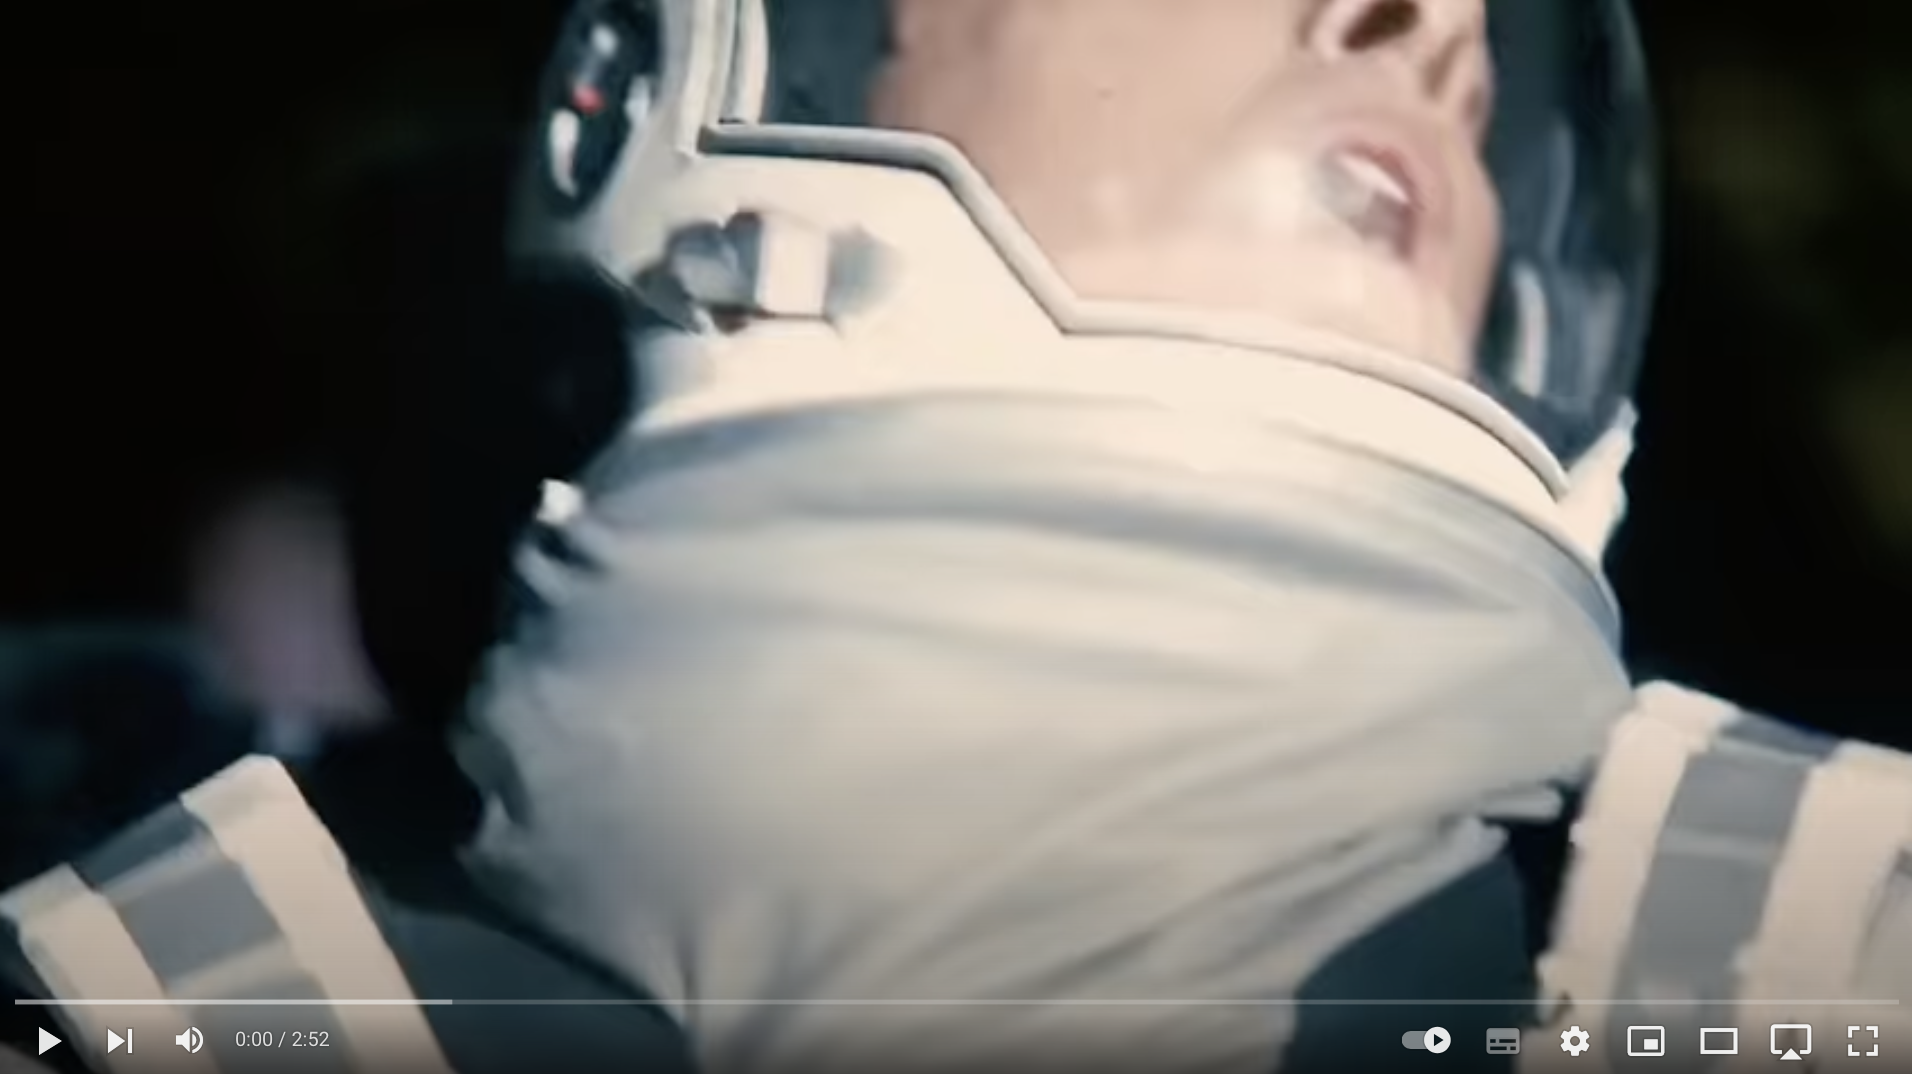 Interstellar - Landing in the Tesseract Scene 1080p HD